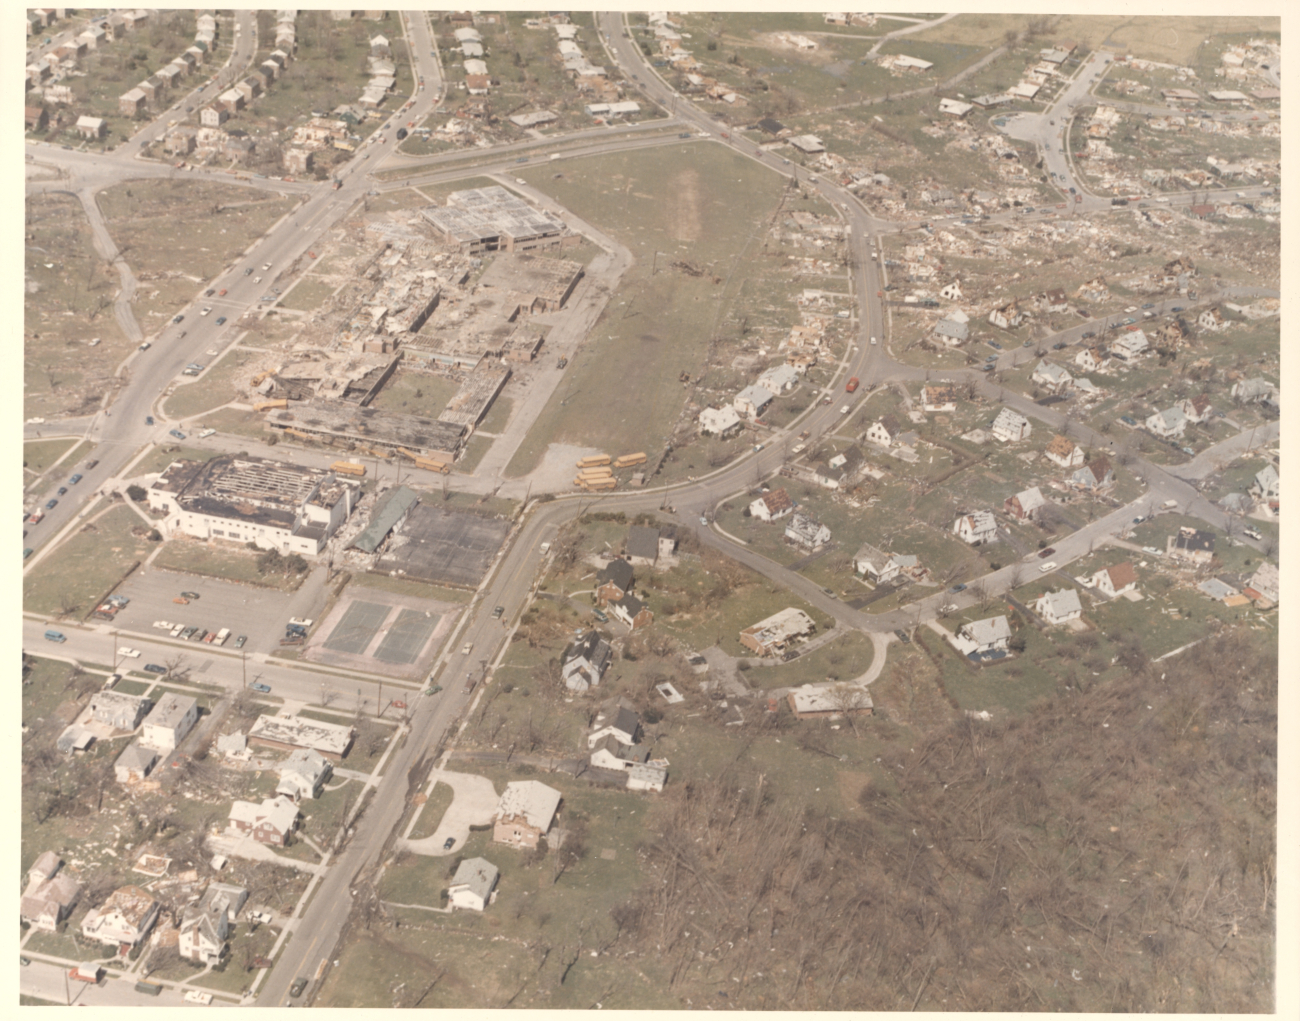 Central High School tornado damage from Super Tornado Outbreak of April 3, 1974